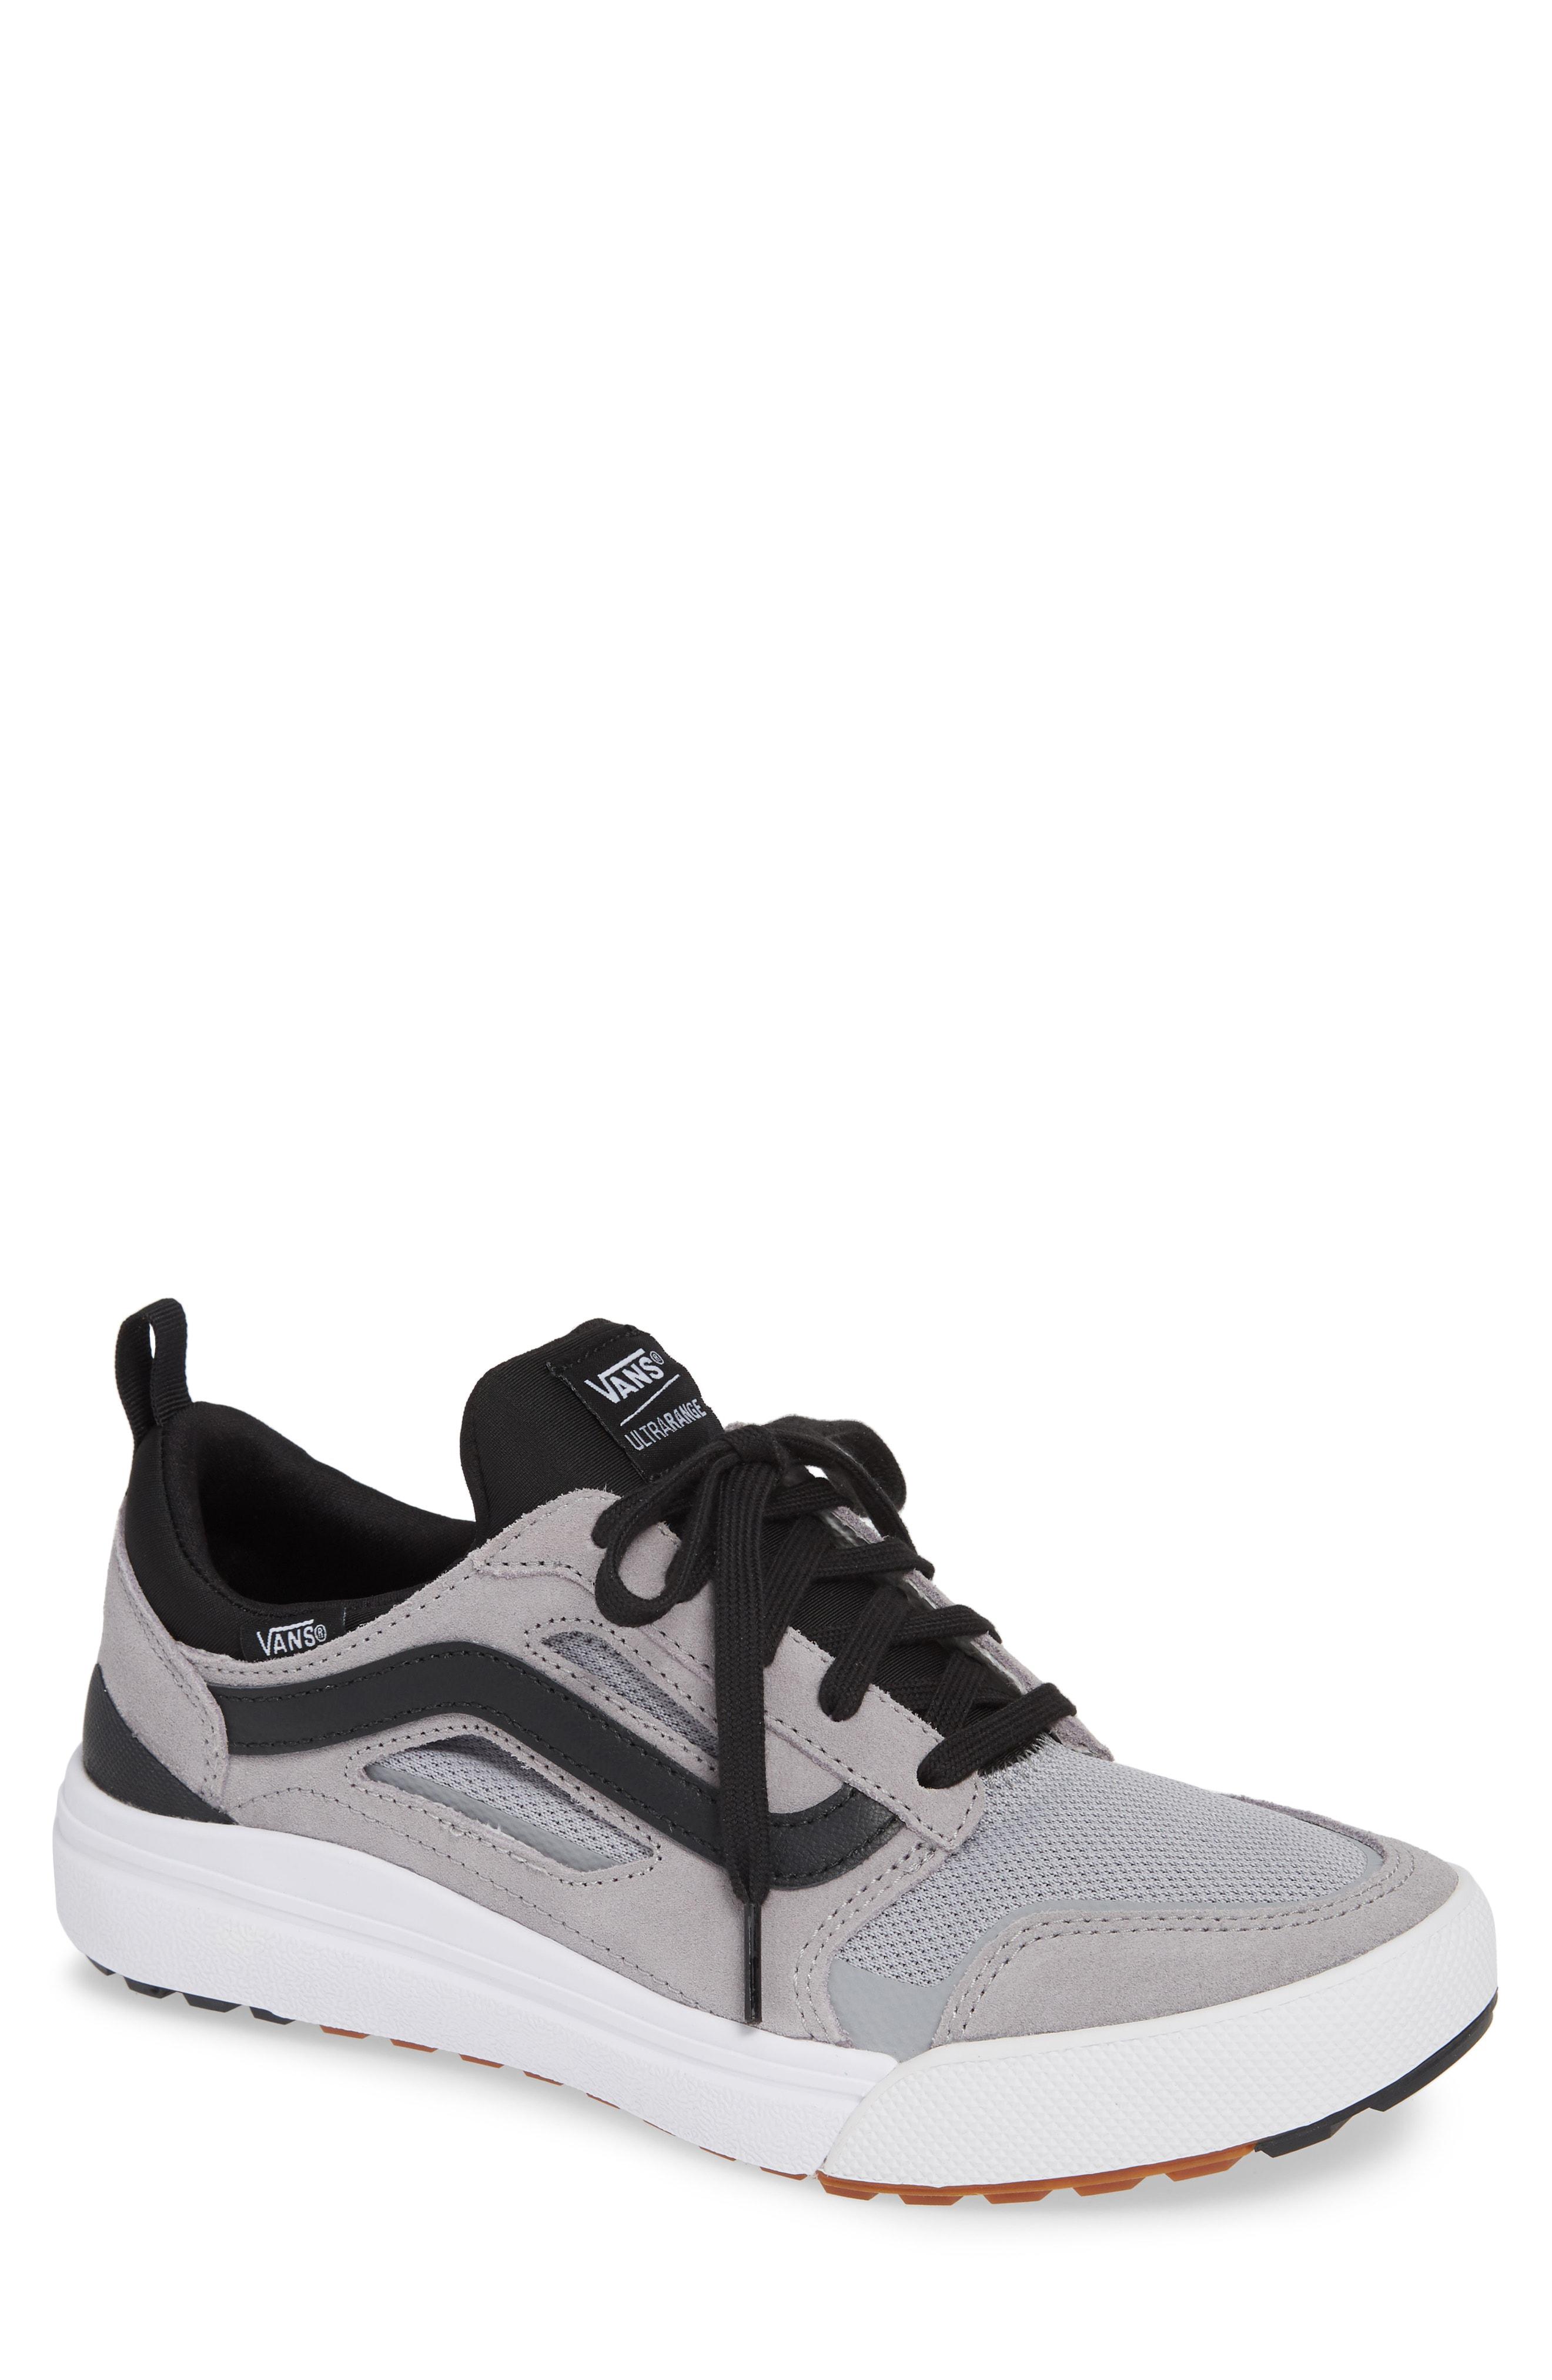 vans ultrarange 3d grey alloy and white shoes